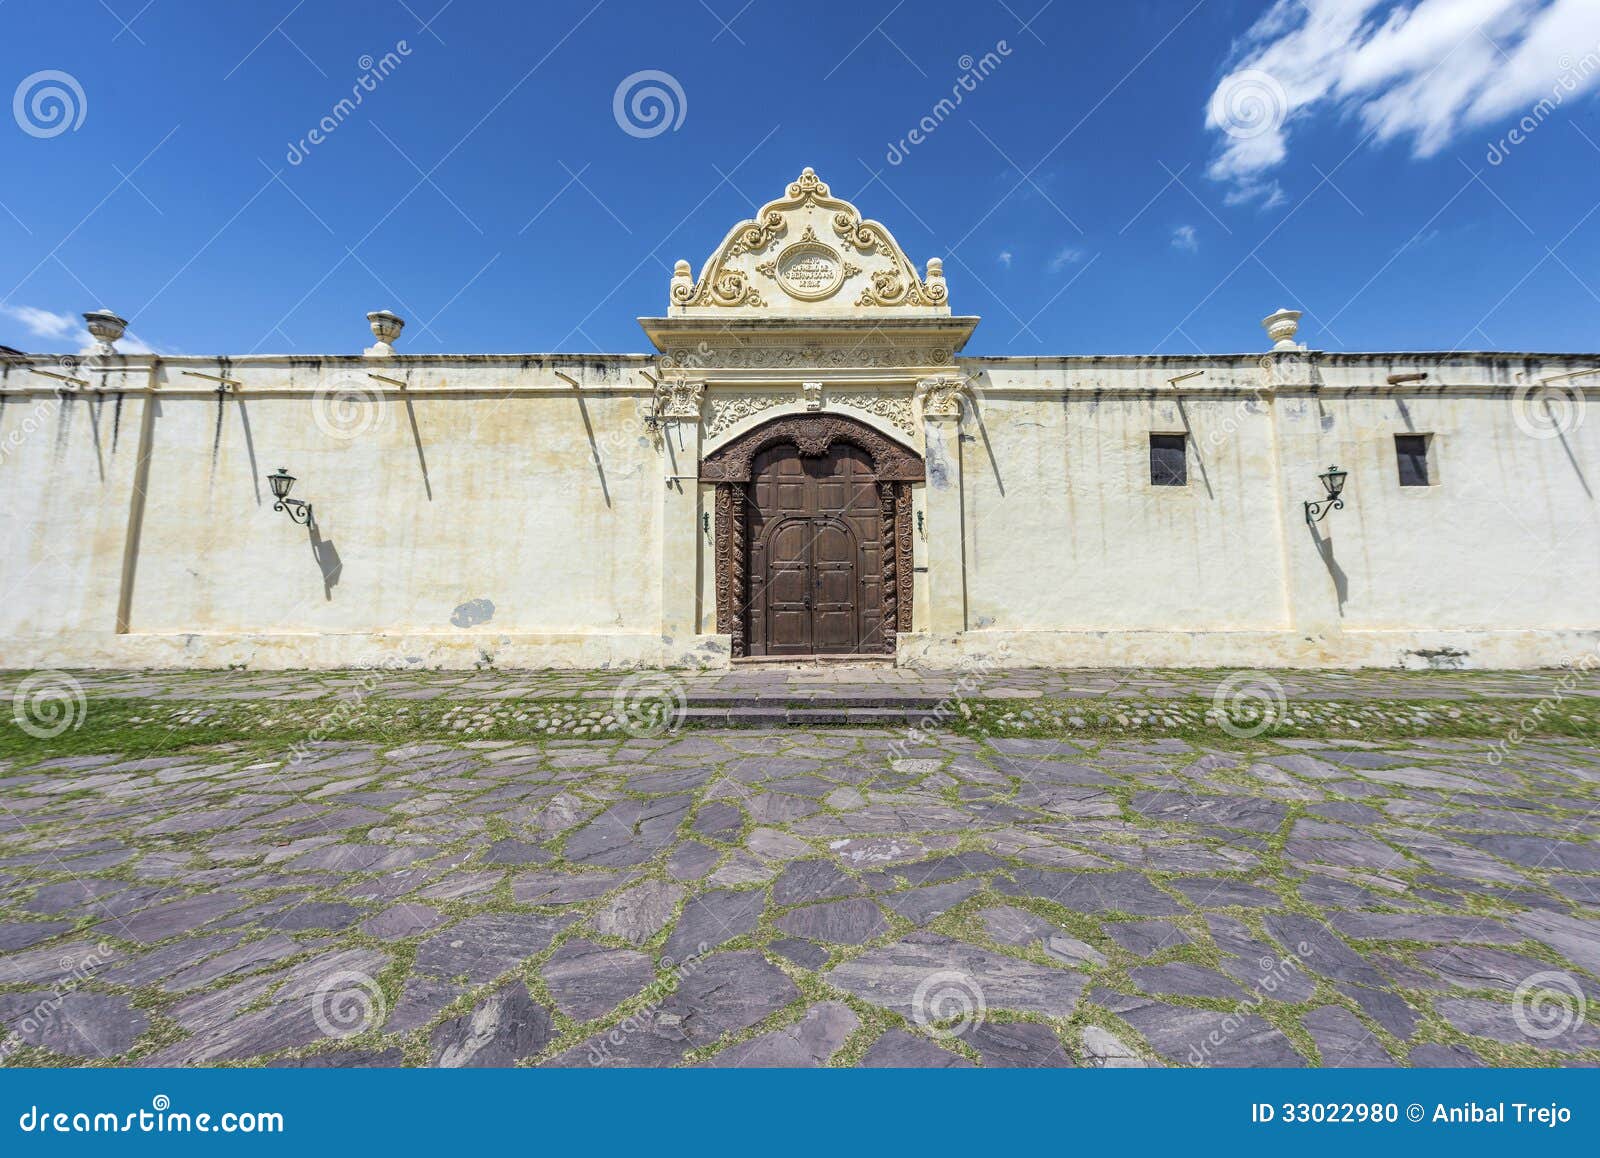 san bernardo convent in salta, argentina